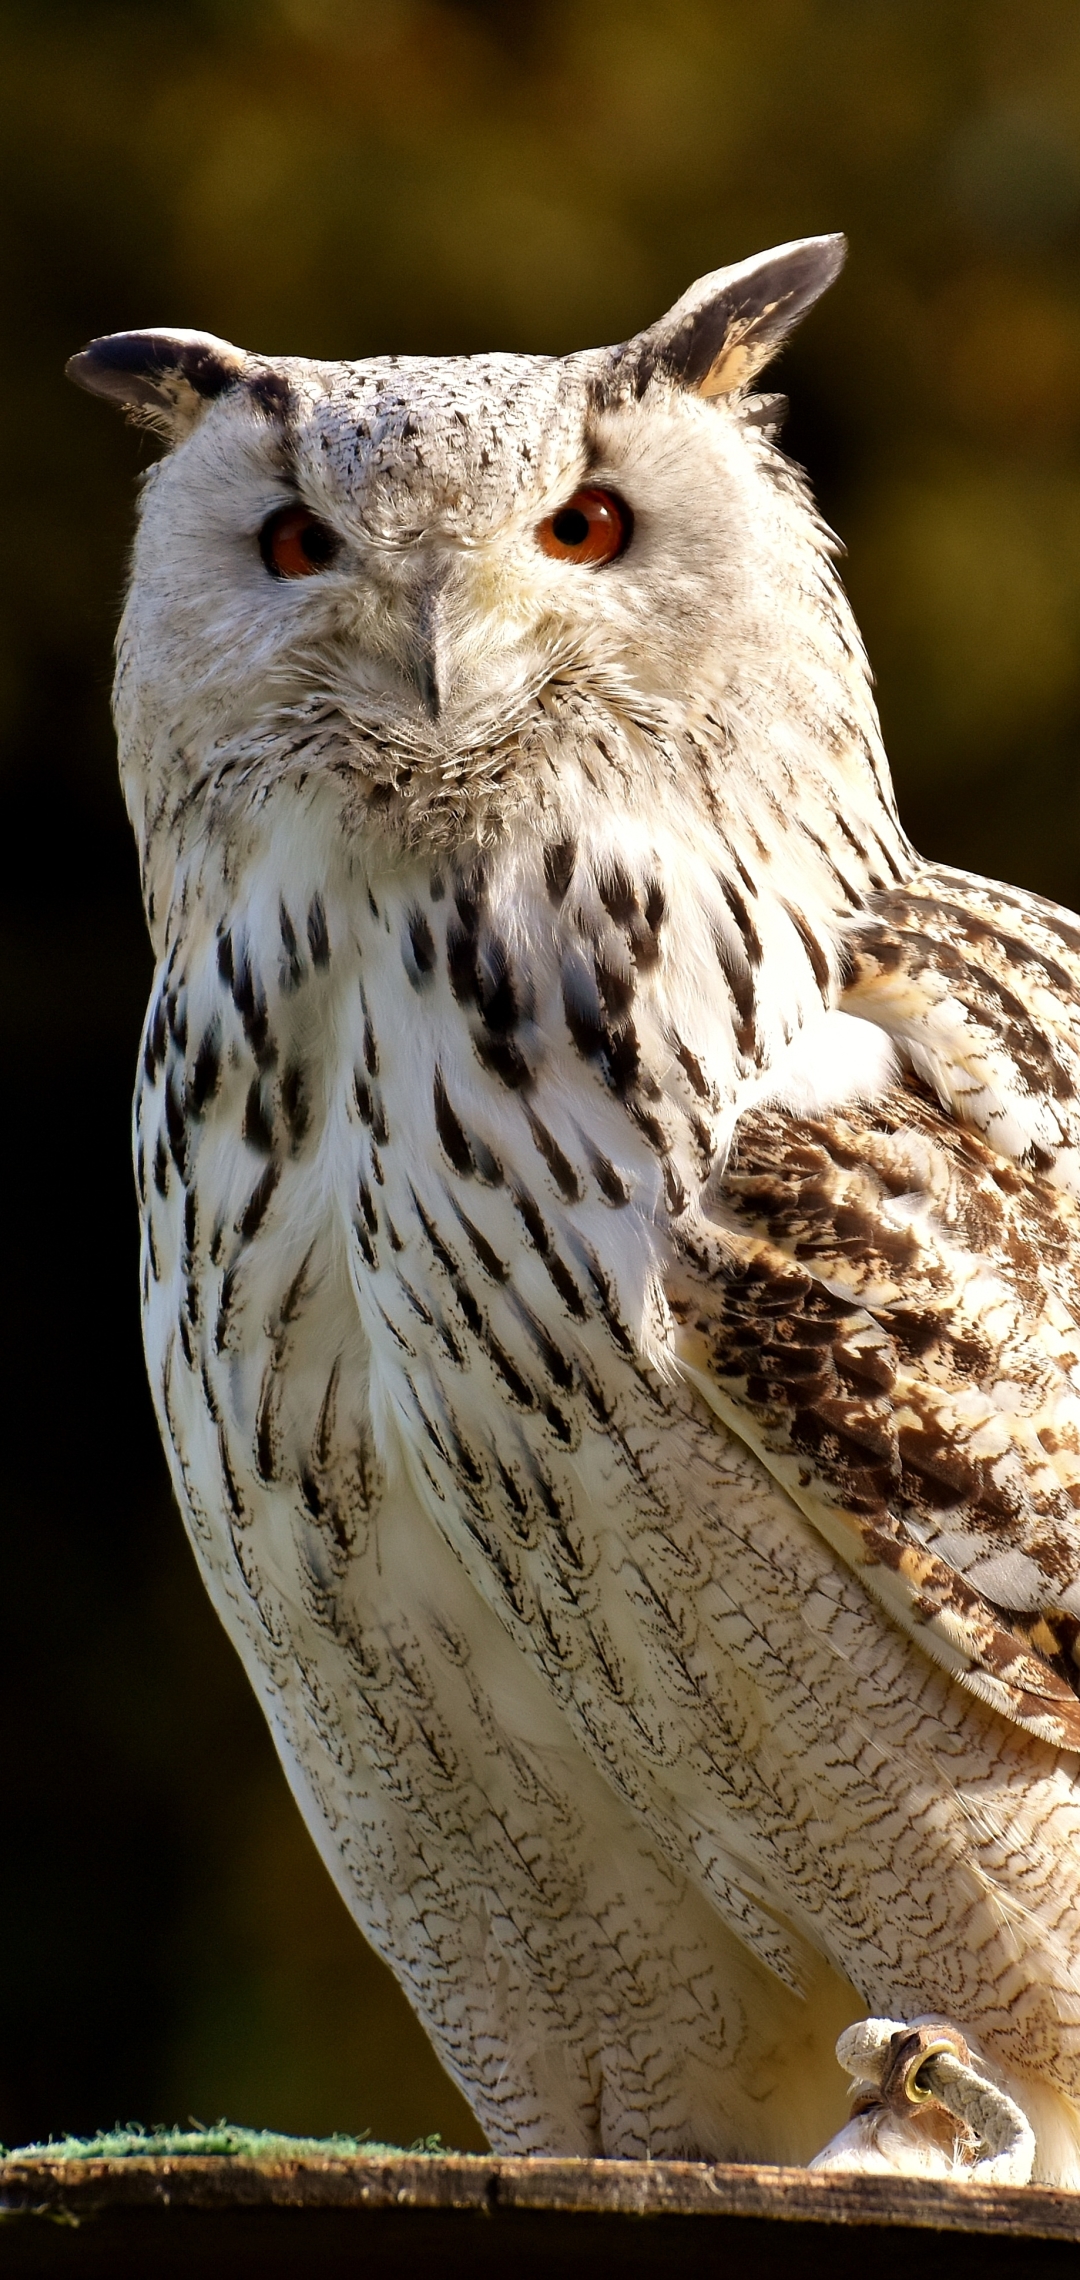 Owl at a Wildlife Park by Alexas_Fotos